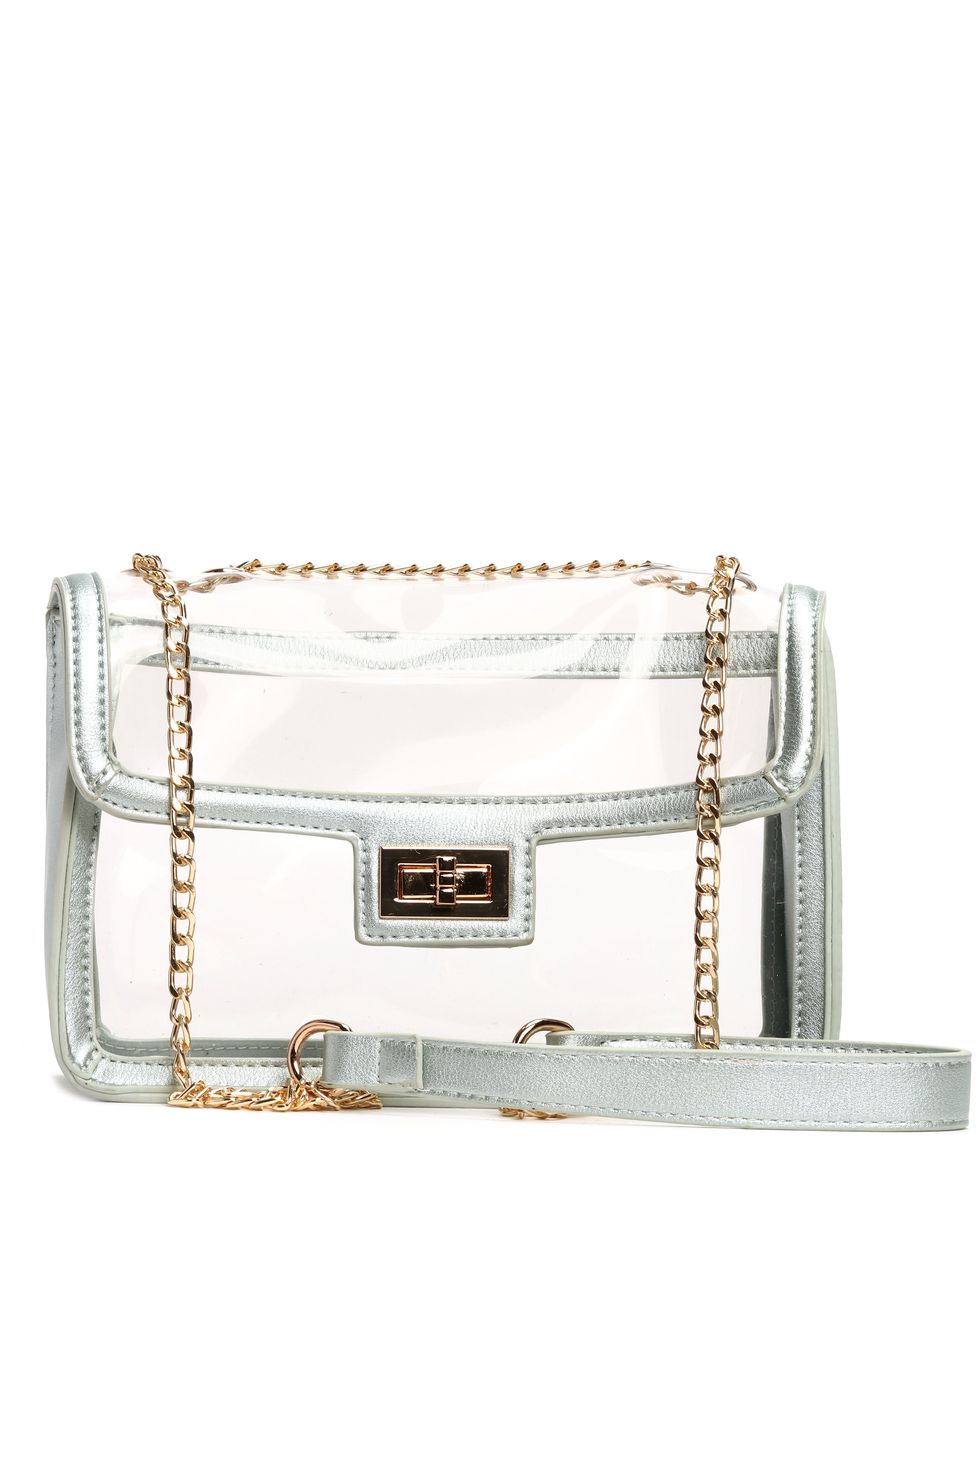 Bag, White, Handbag, Fashion accessory, Shoulder bag, Beige, Leather, Silver, Chain, Rectangle, 